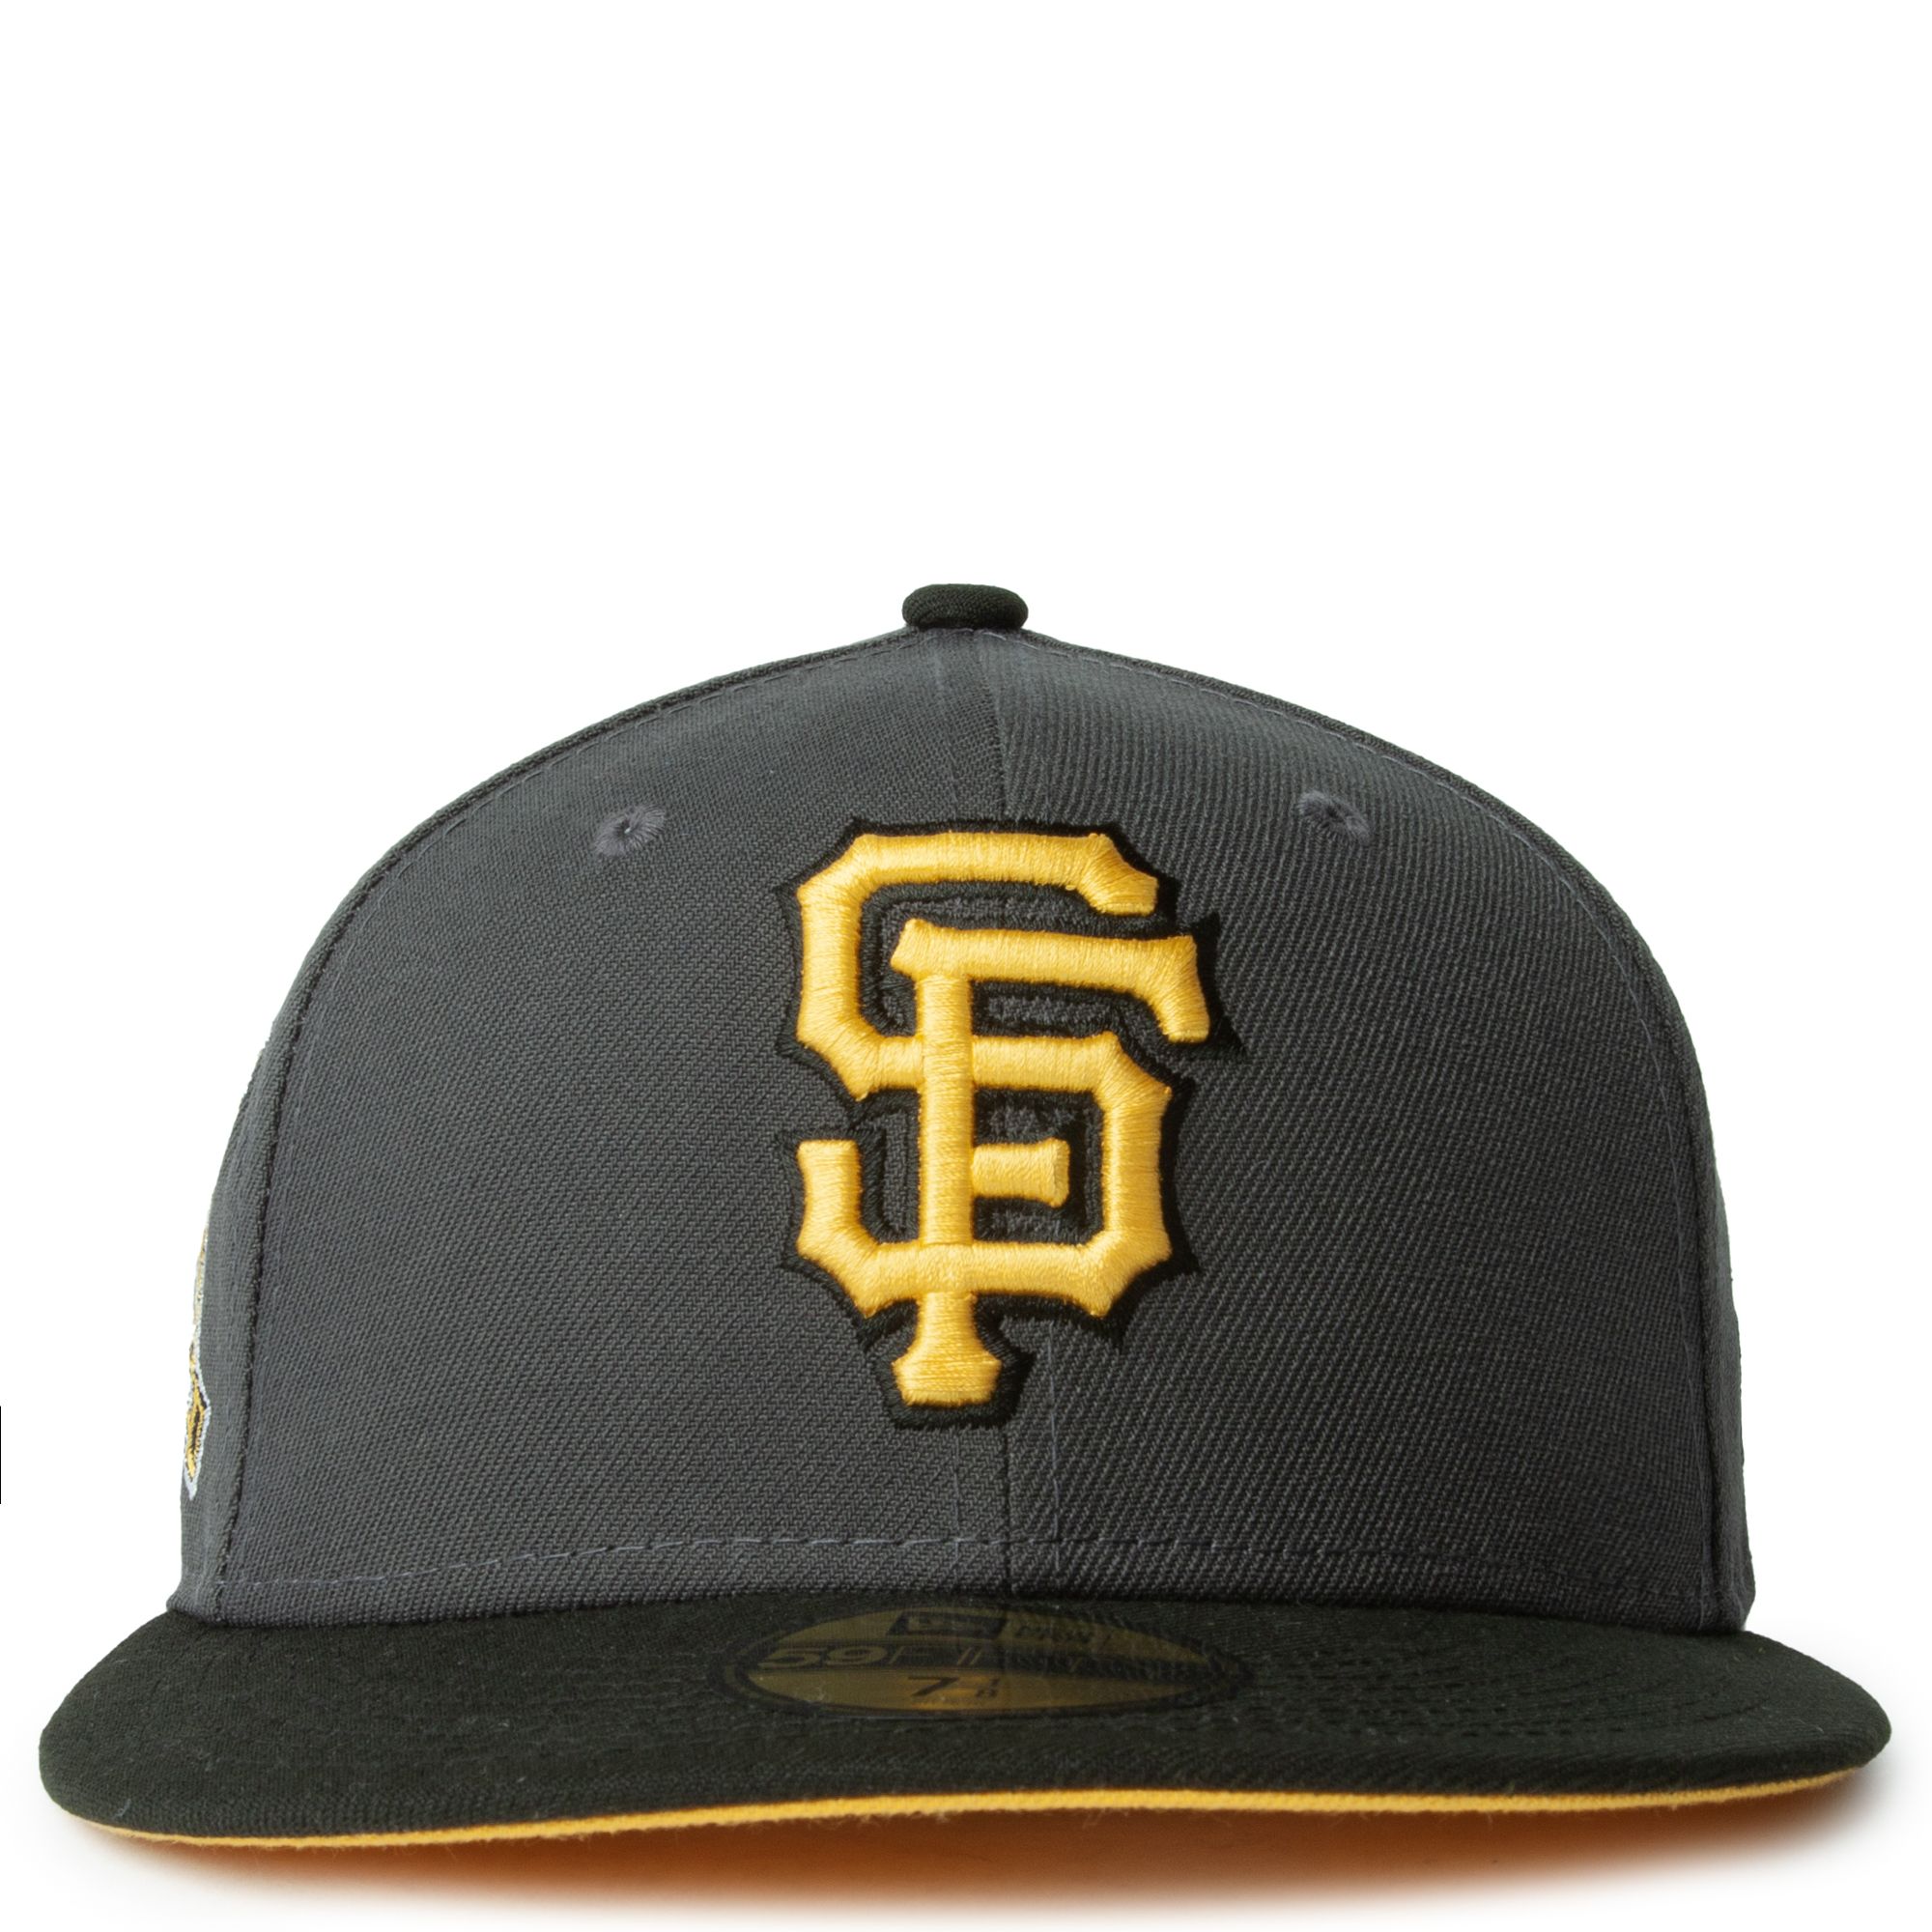 Official San Francisco Giants Hats, Giants Cap, Giants Hats